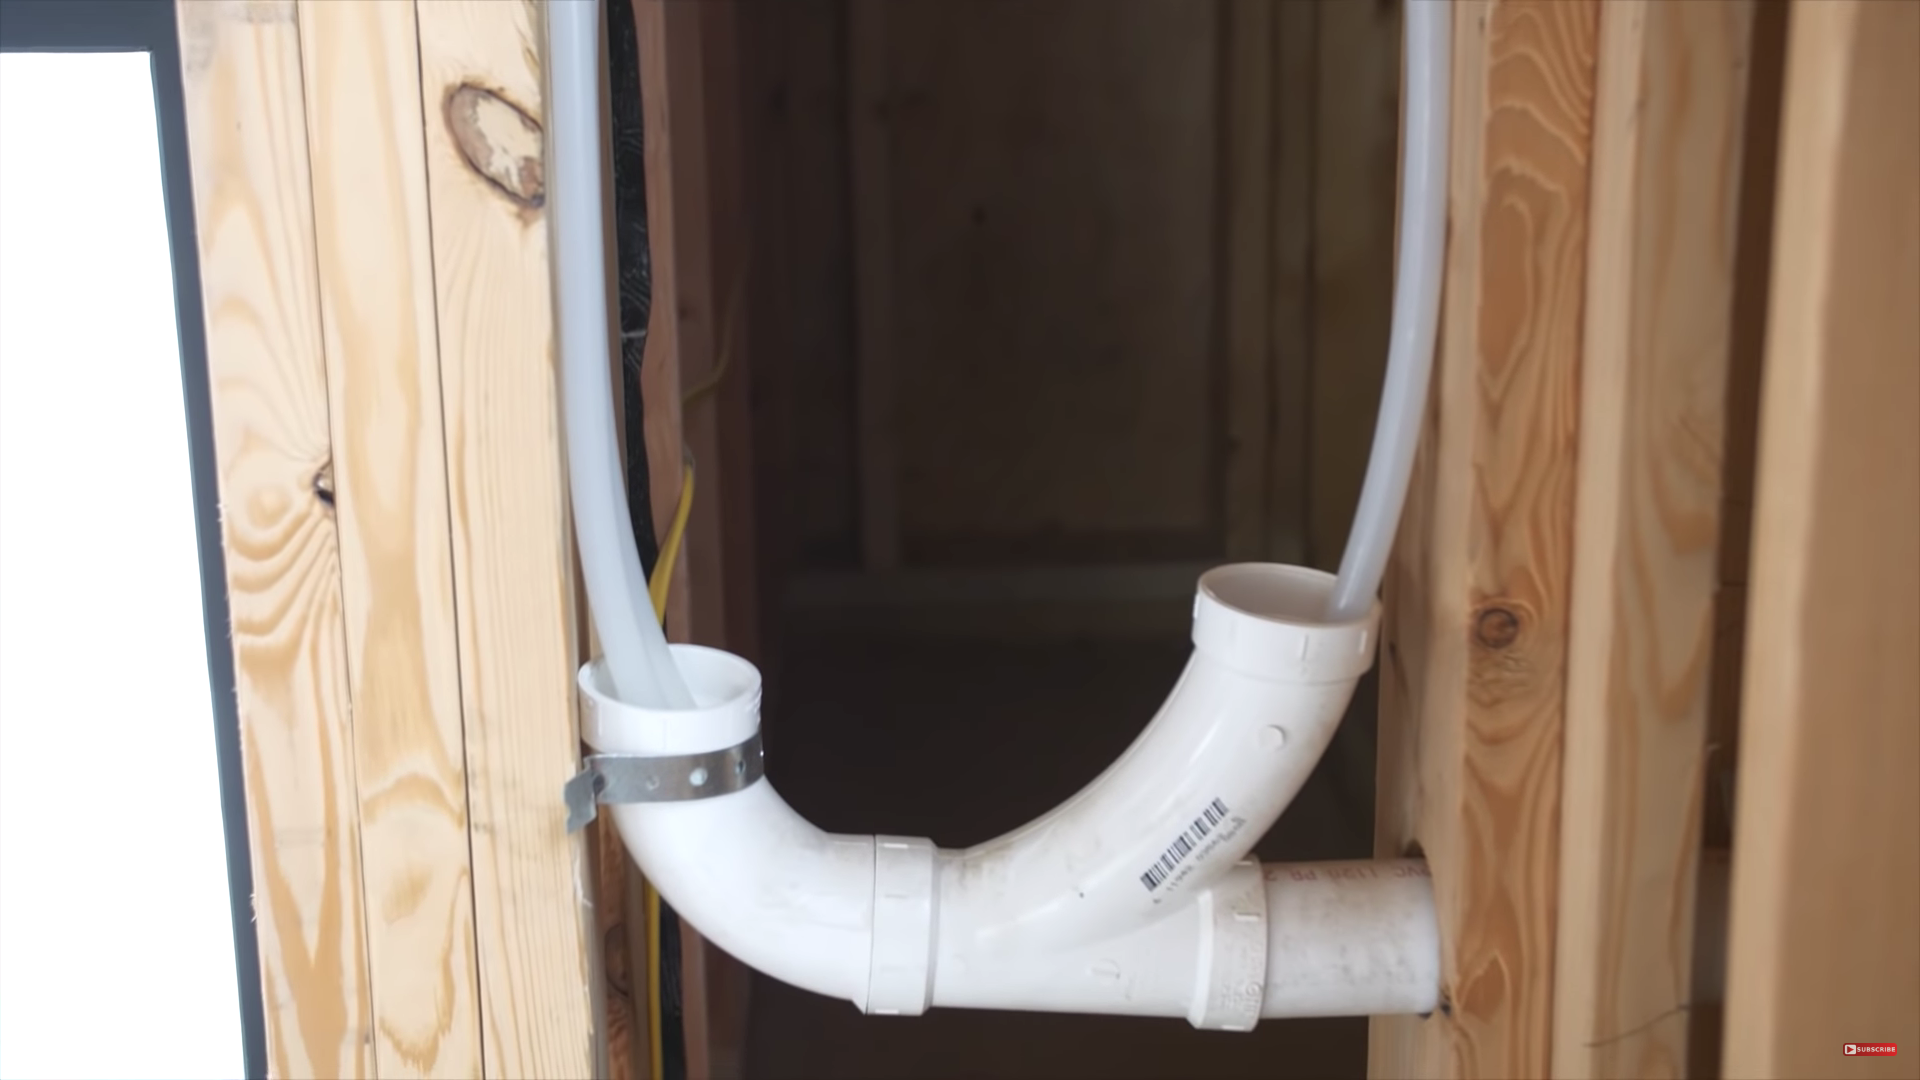 PVC plumbing sleeve protects PEX